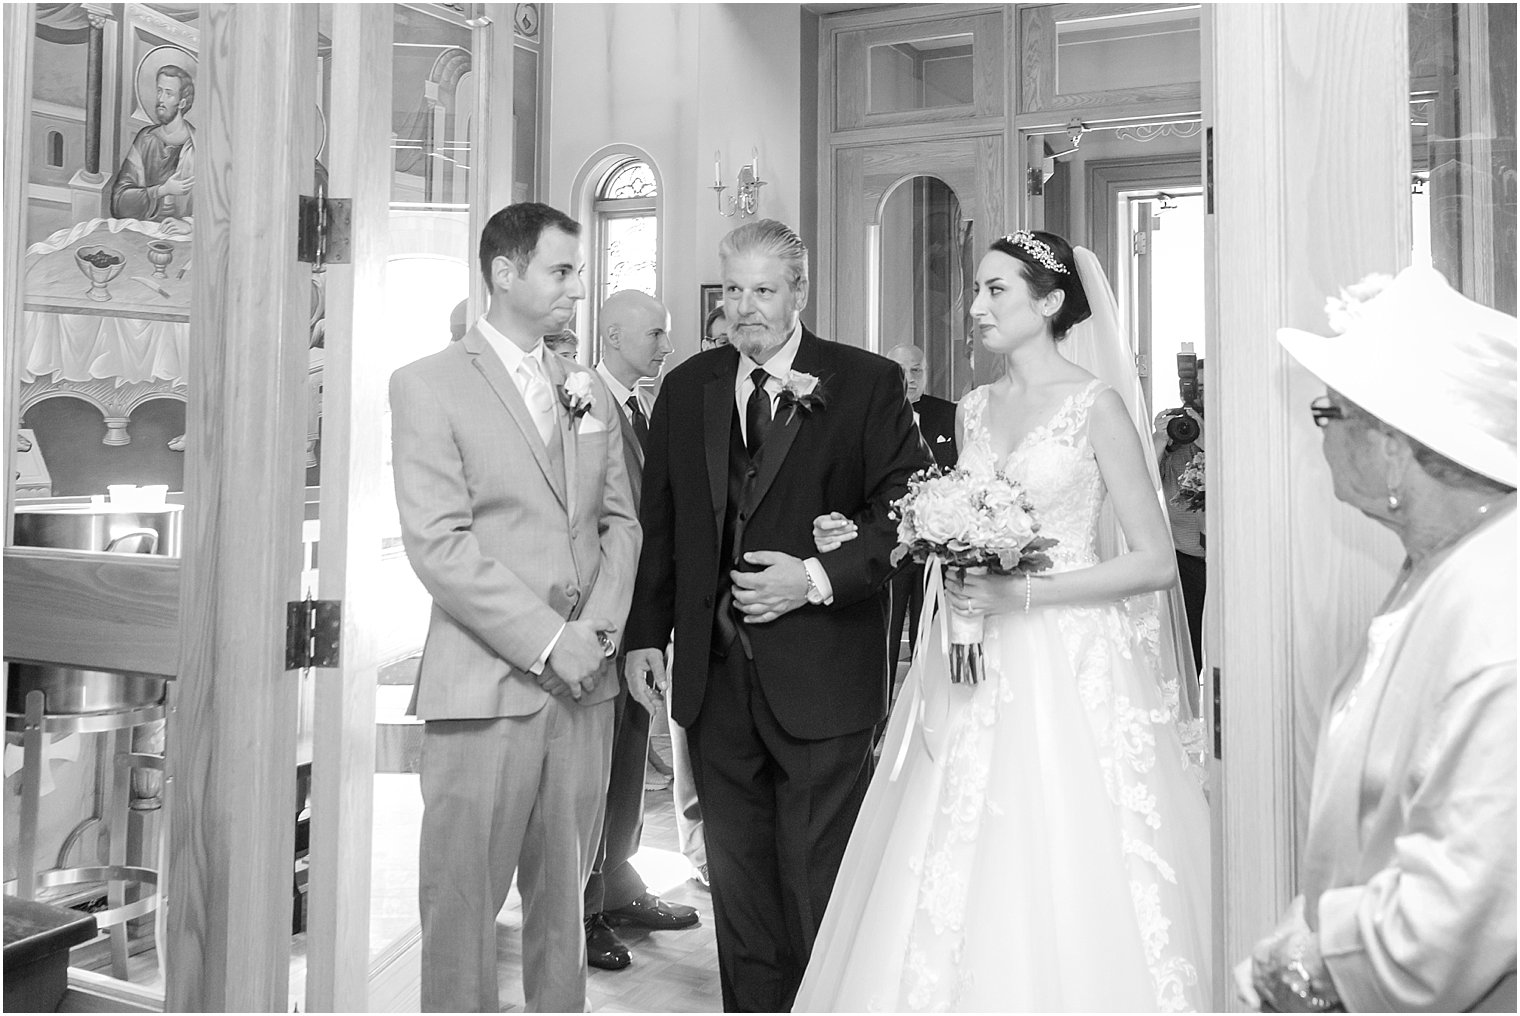 Wedding ceremony at St. Alexander Nevsky Cathedral